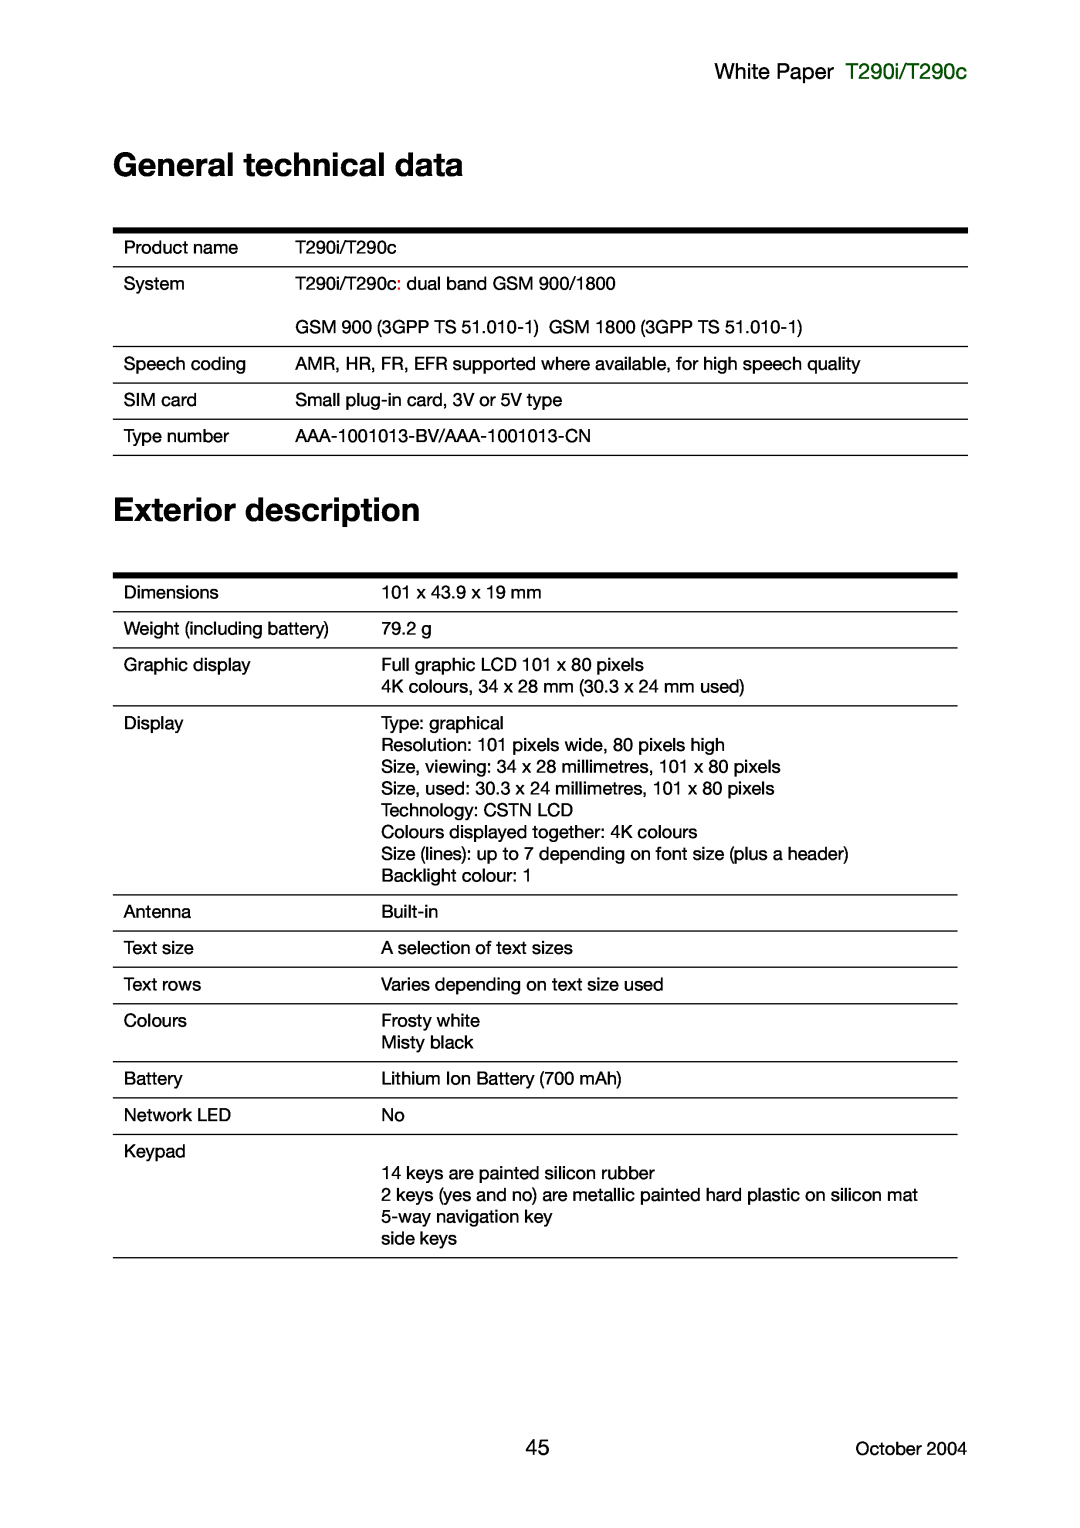 Sony Ericsson manual General technical data, Exterior description, White Paper T290i/T290c 